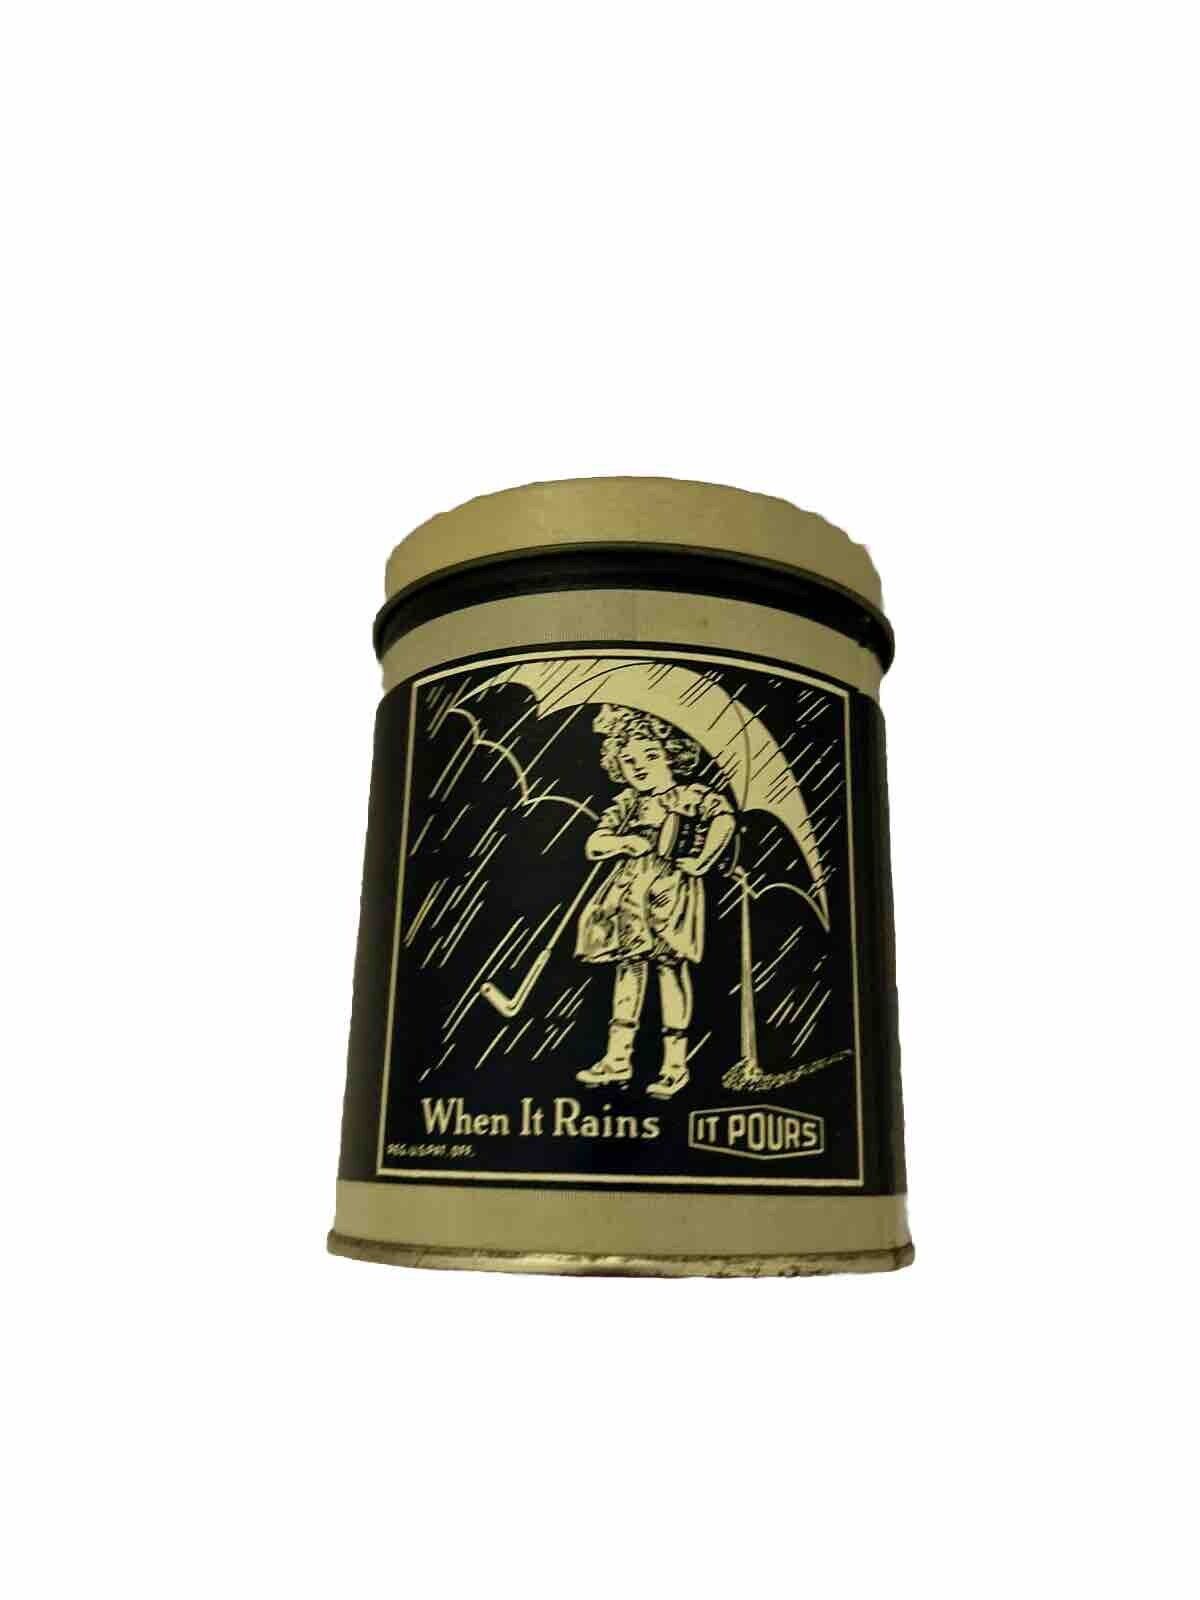 Vintage Morton Salt Tin Canister 1985 Advertising Bristol Ware 5 In Tall